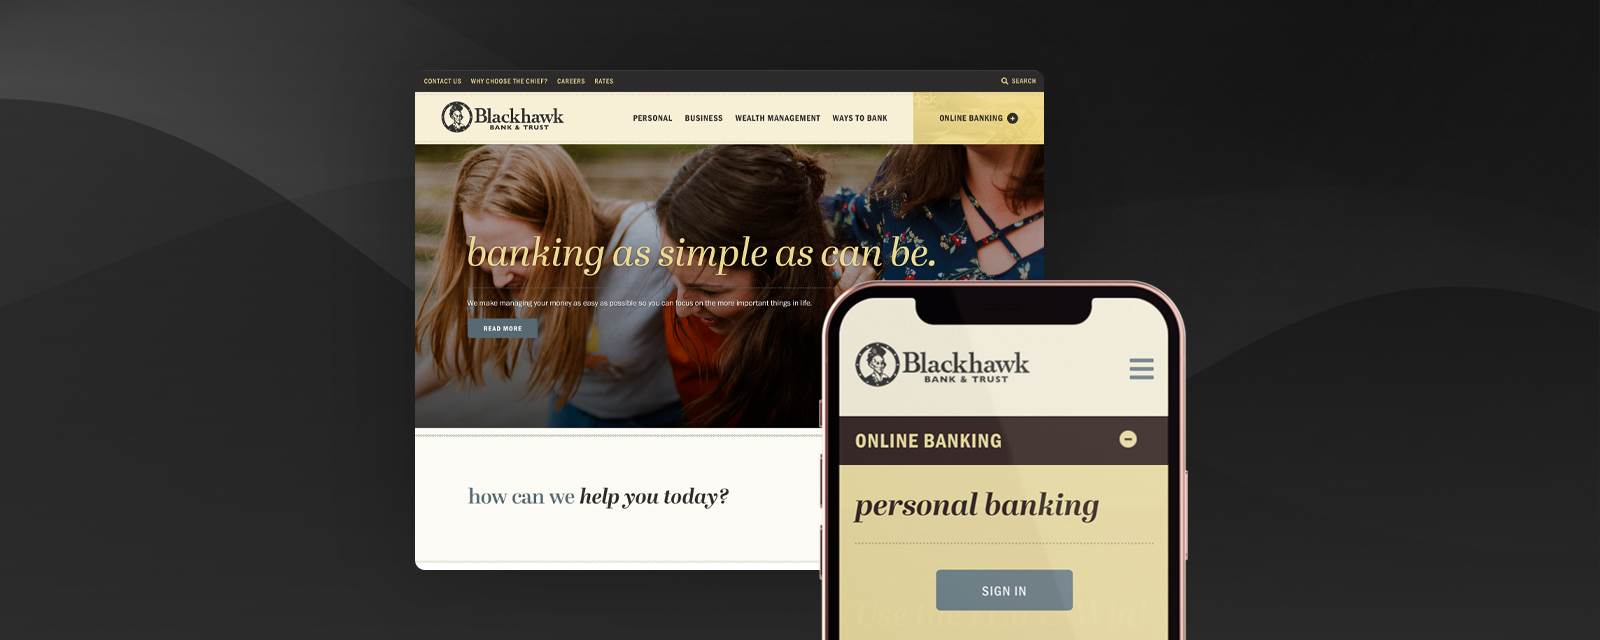 Go to Bank Website Redesign Boosts Users, User Satisfaction blog post